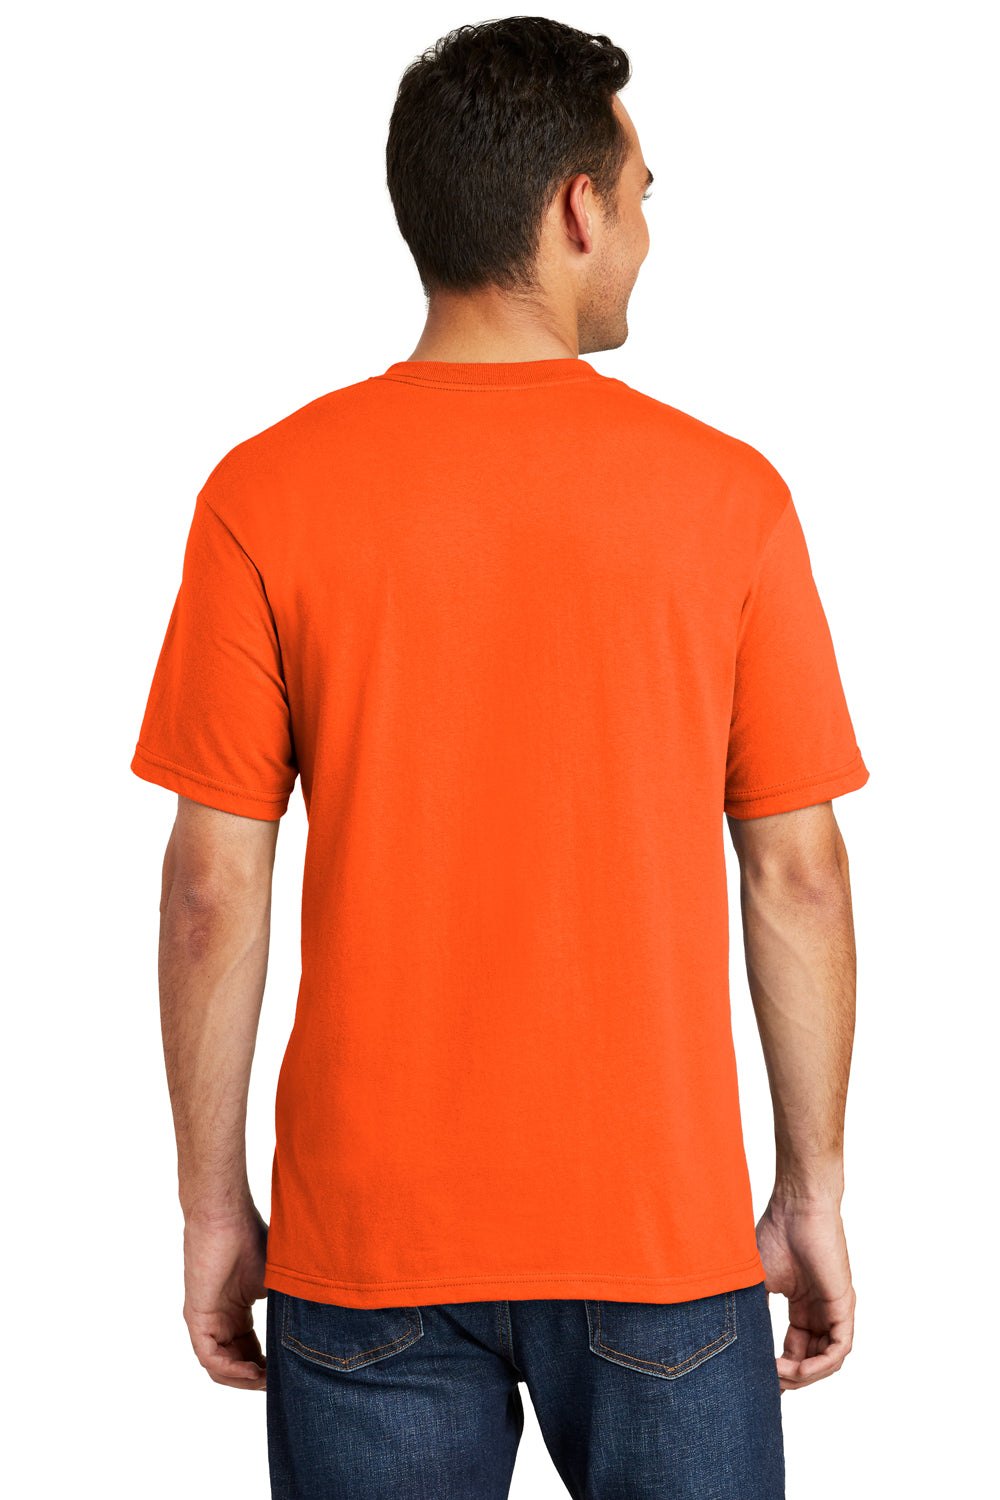 Port & Company USA100 Mens USA Made Short Sleeve Crewneck T-Shirt Safety Orange Back